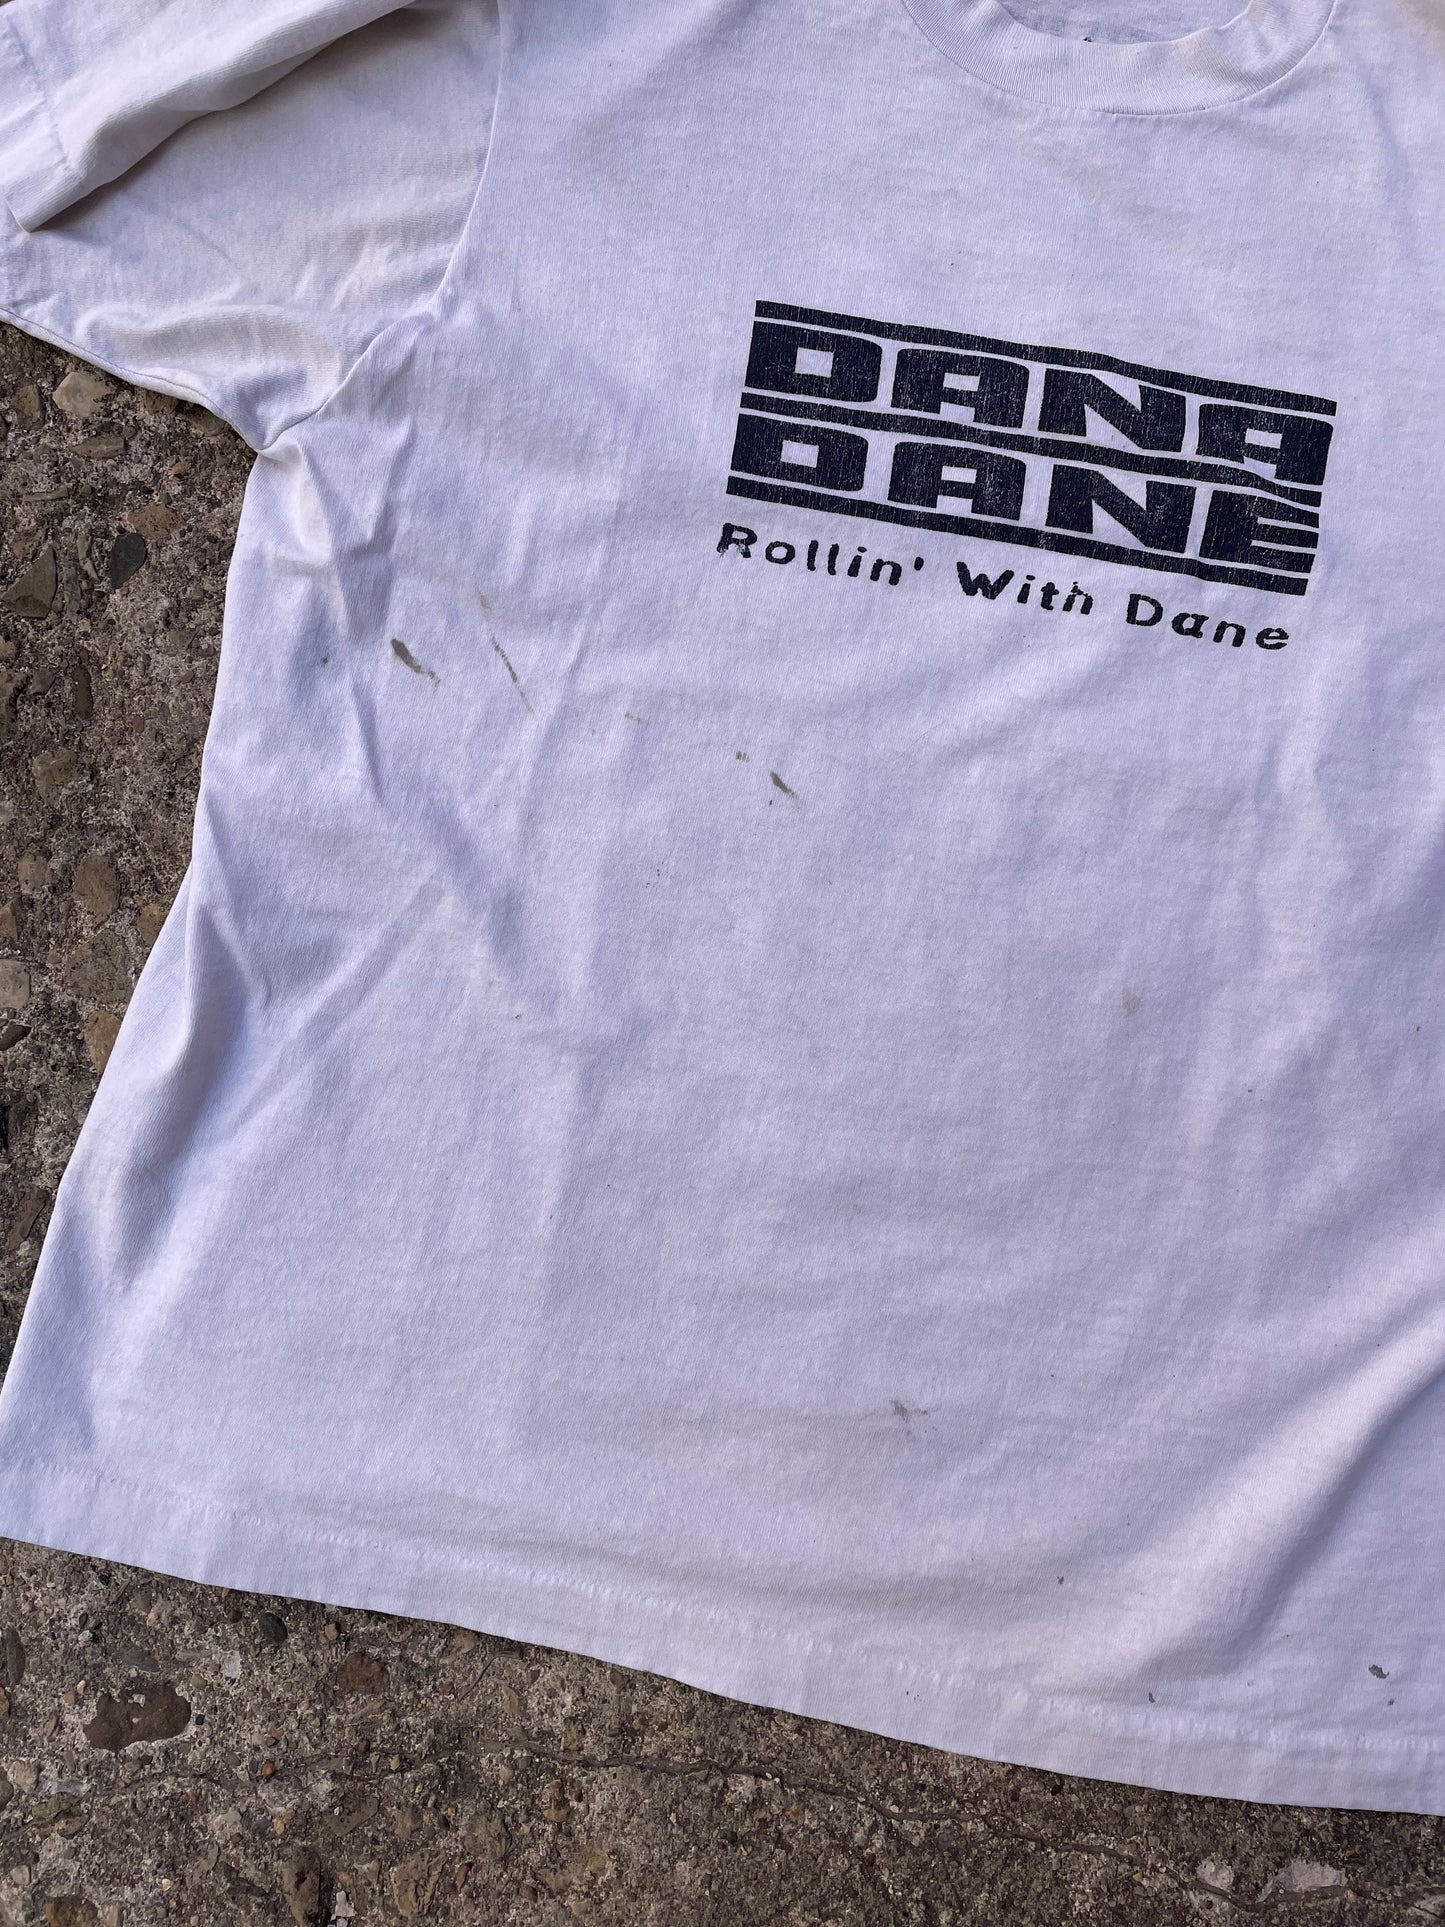 1995 Dana Dane 'Rollin' With Dane' Album Rap T-Shirt - L